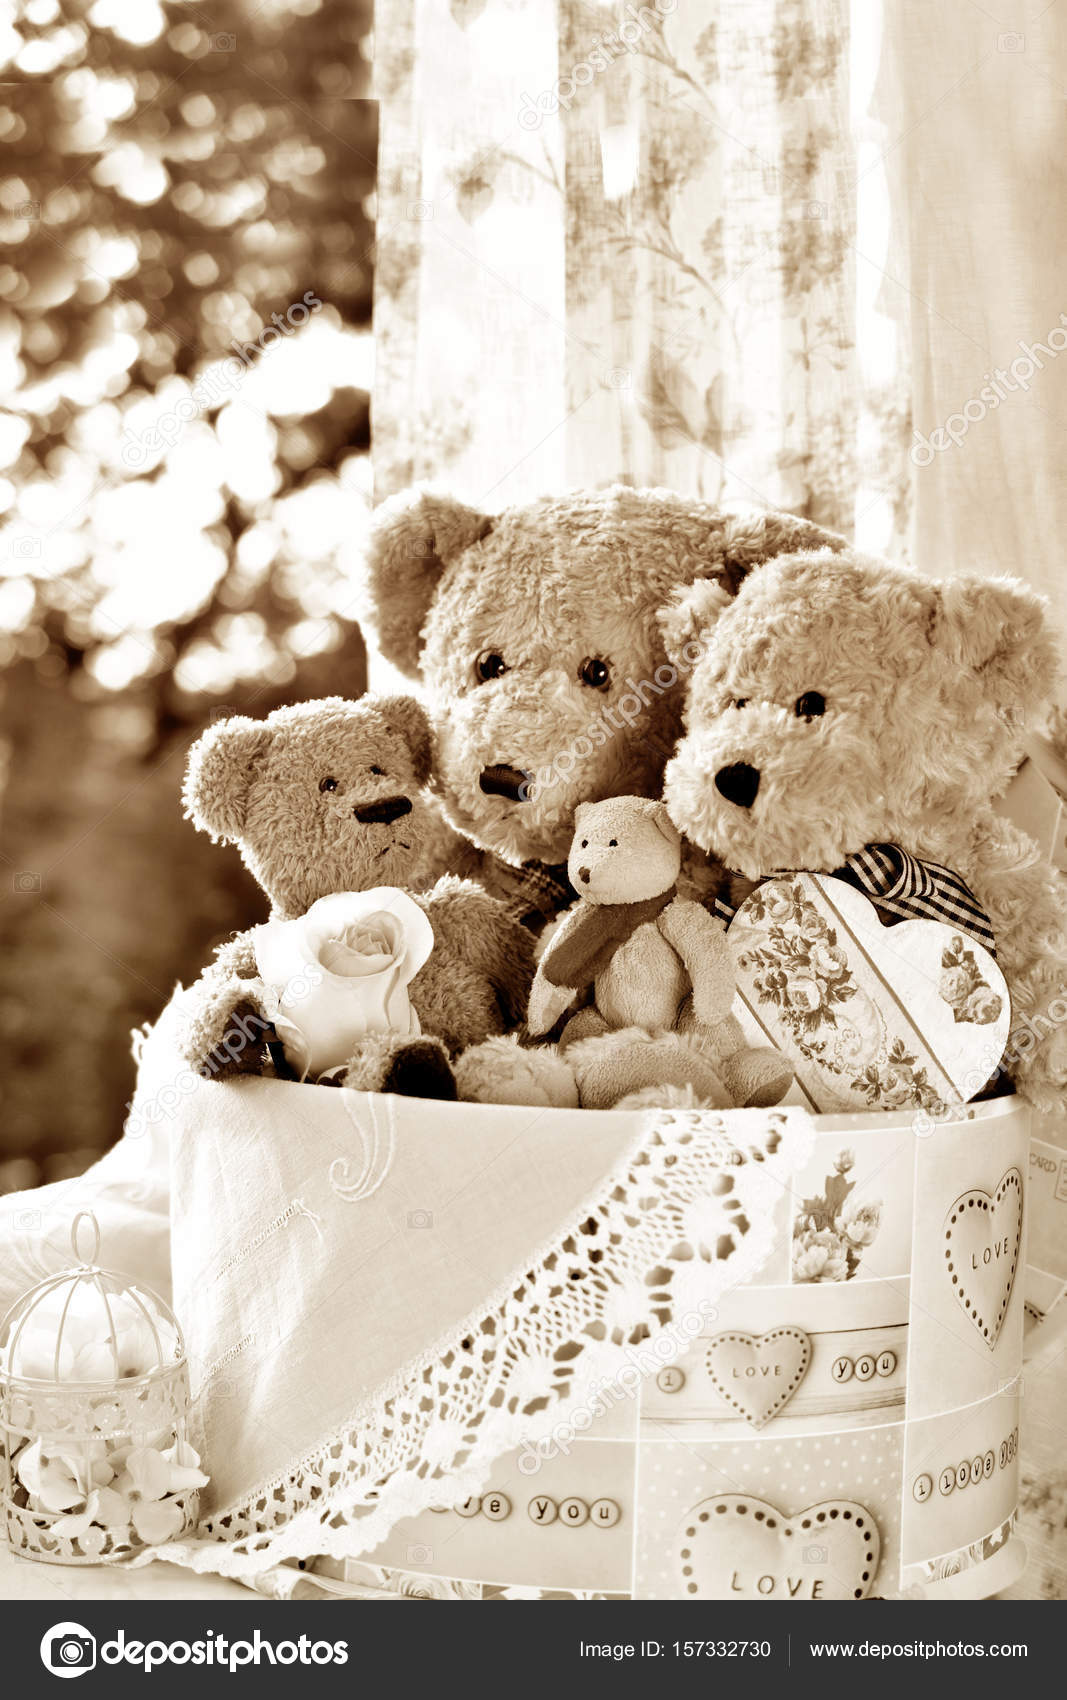 stuffed bear family